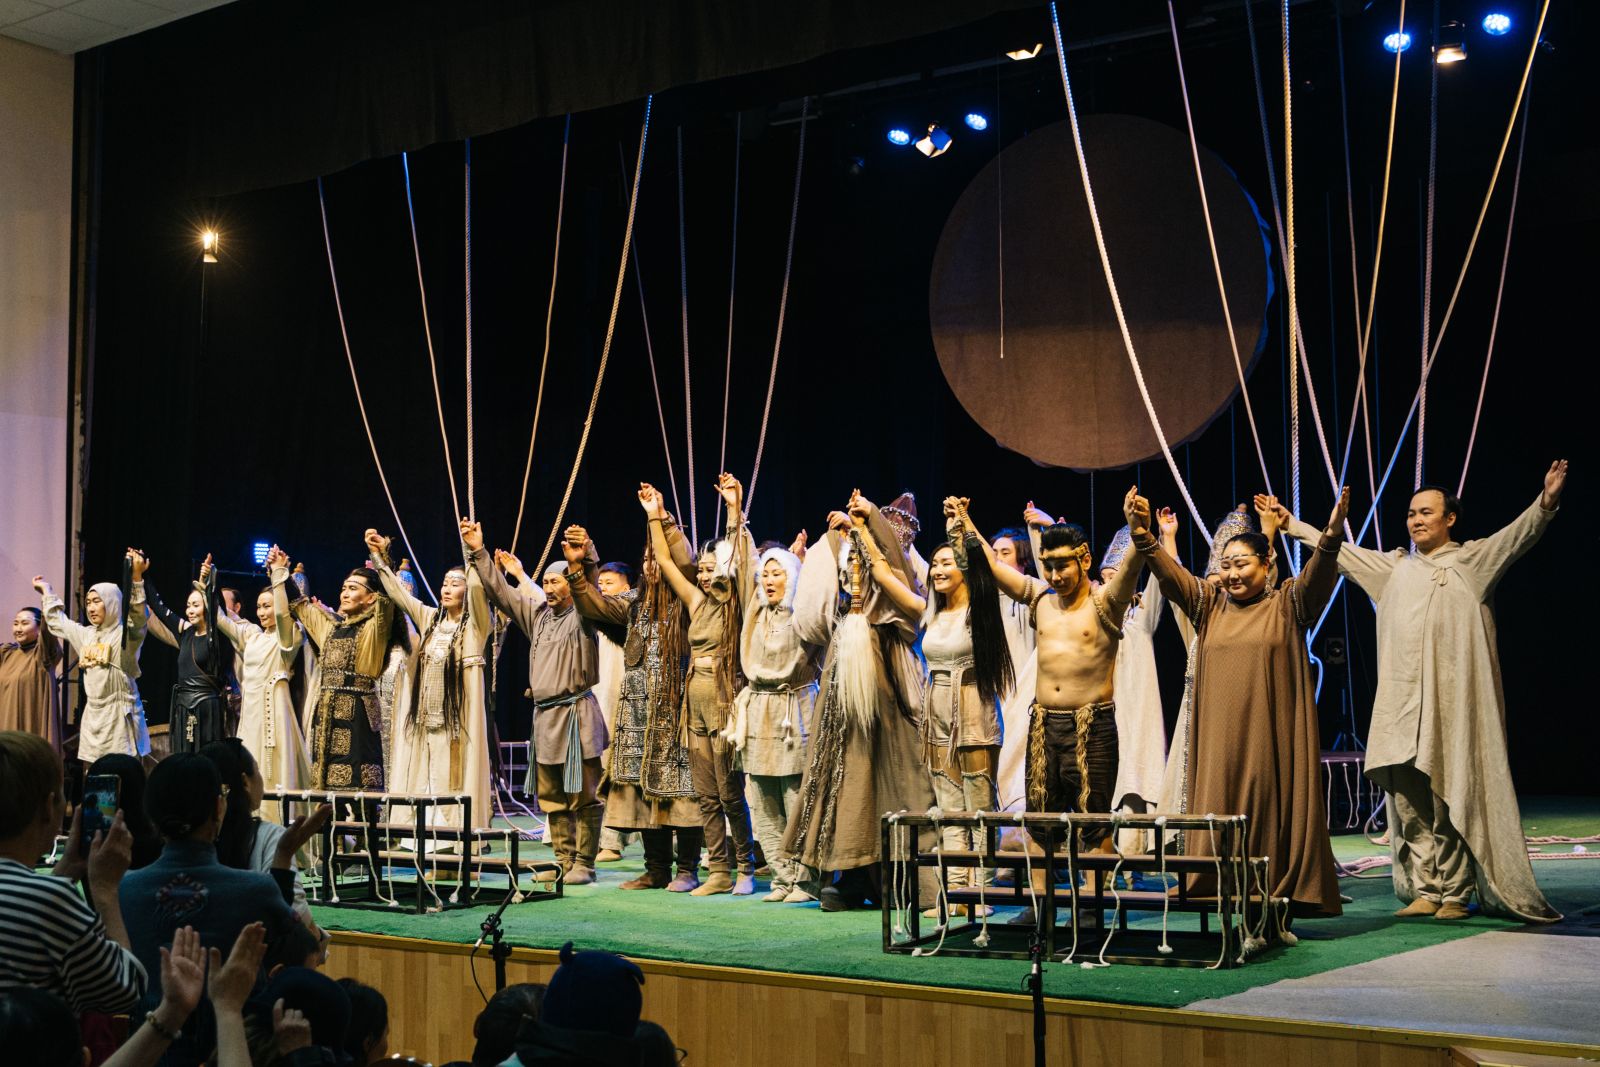 Съемки спектакля театра Олонхо для проекта Триколора прошли в Якутии